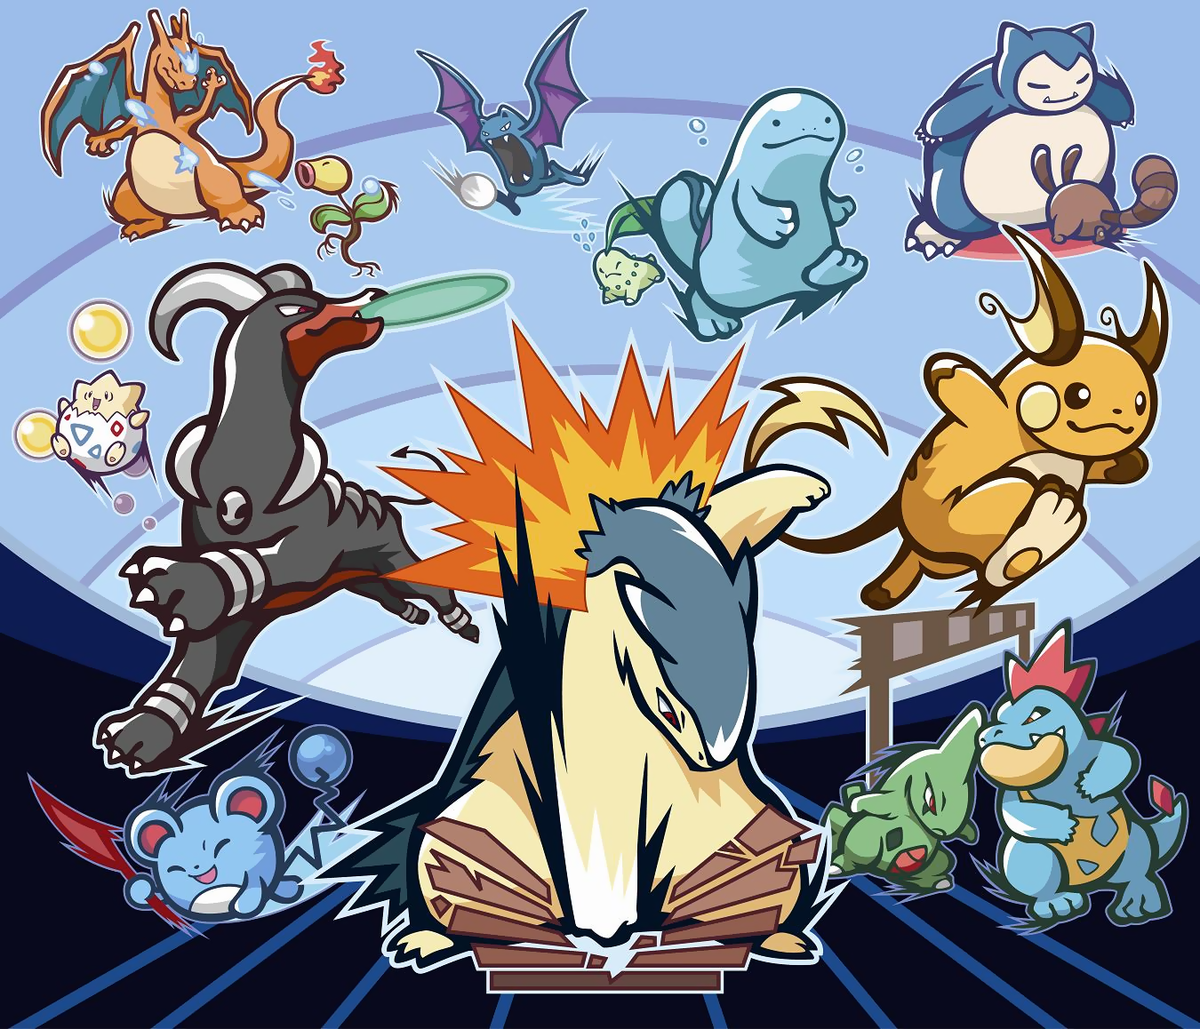 Pokémons exclusivos das versões Heart Gold e Gold #fyp #pokemon